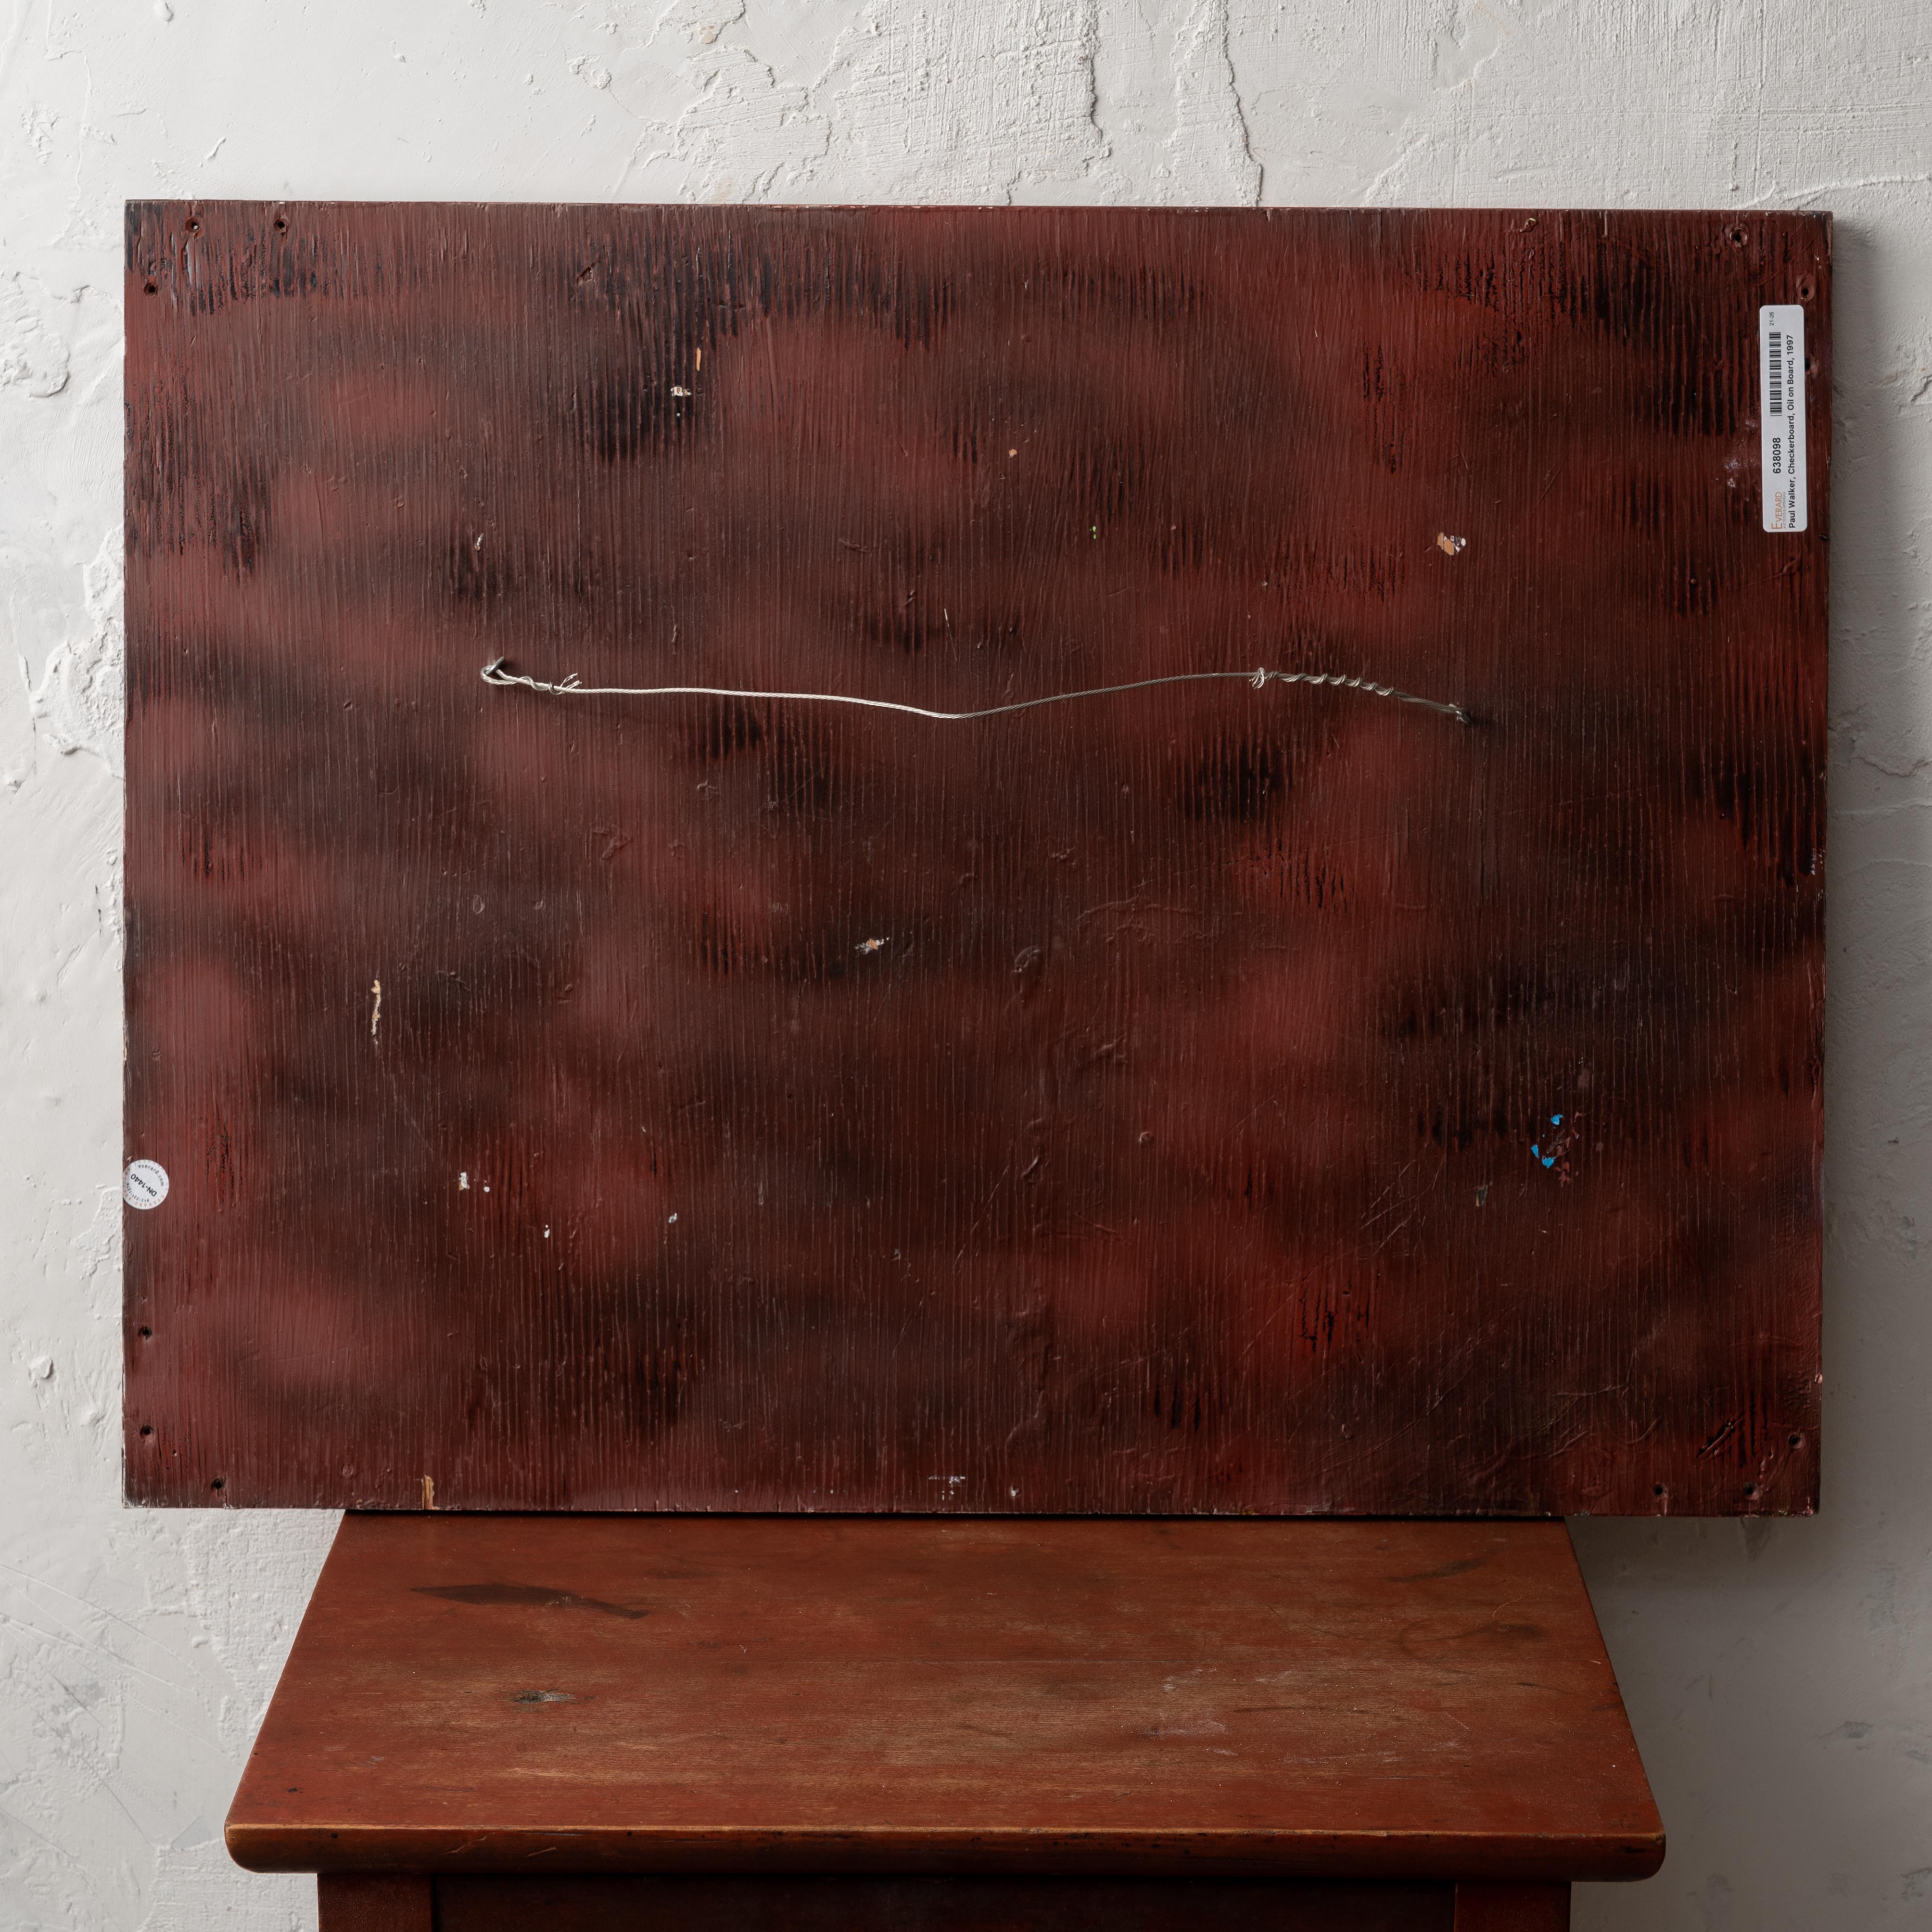 Paul Walker – Checkerboard im Art brut-Stil (Holz) im Angebot